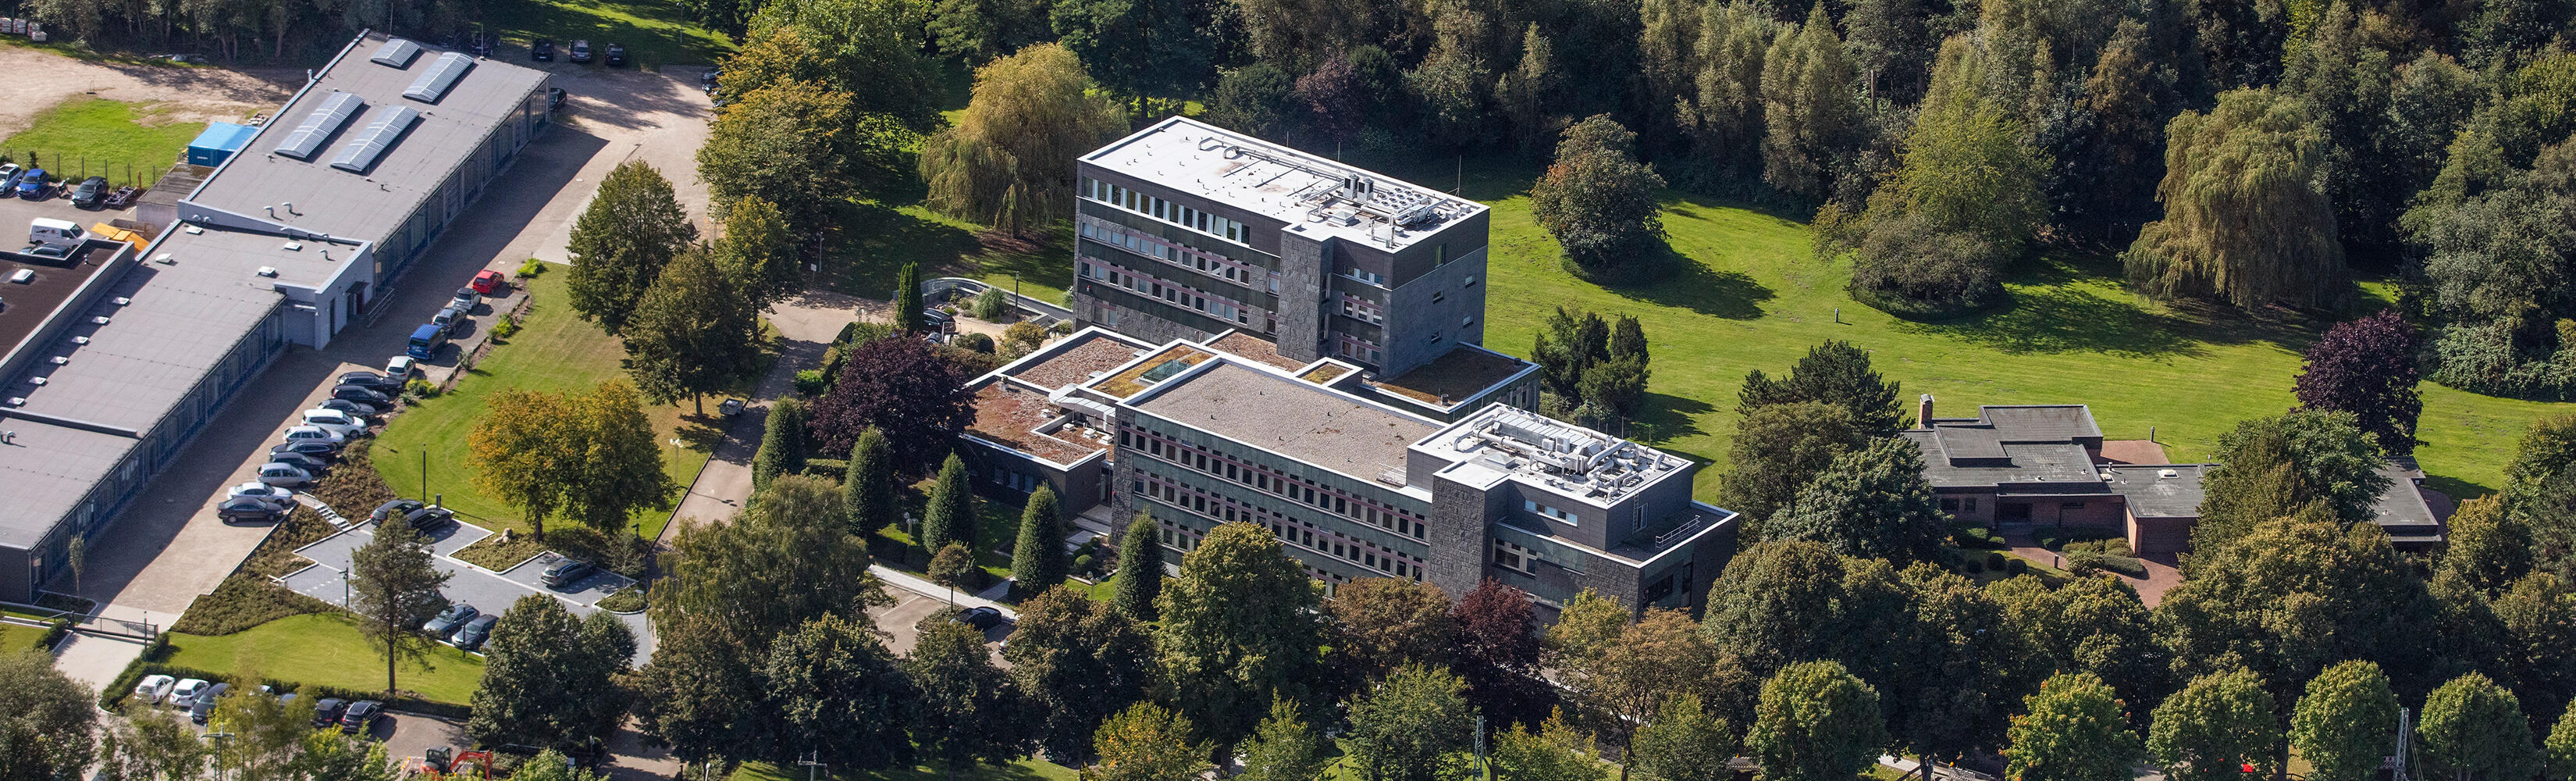 Zentrale in Pinneberg